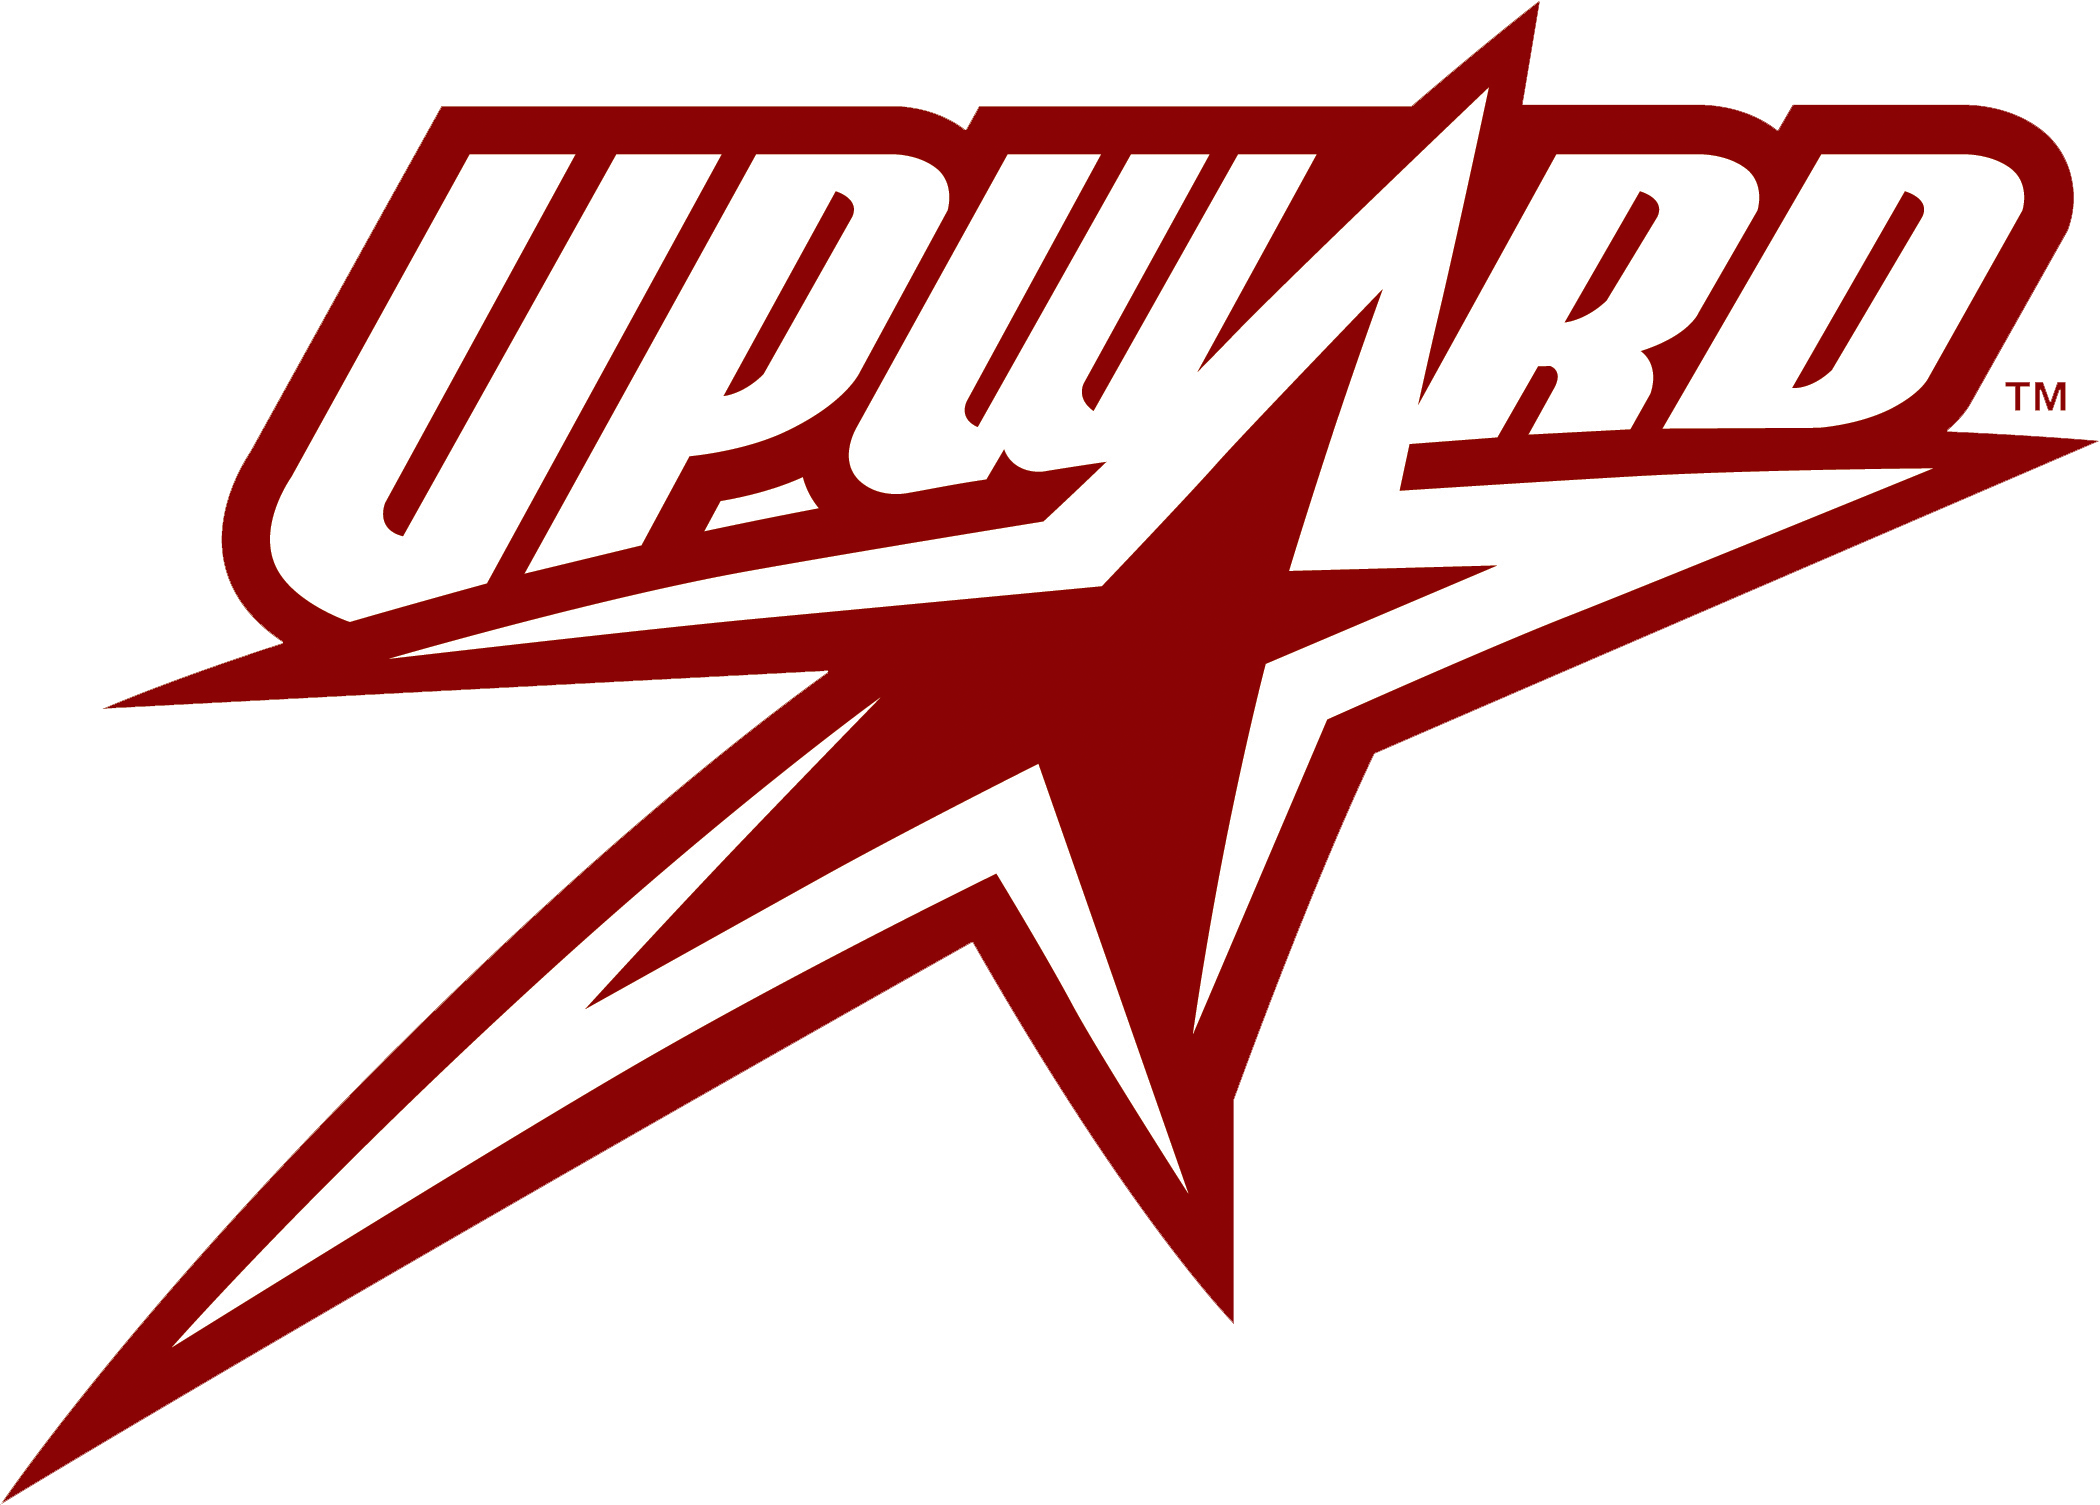 05 06 Upward Logo Brgdy Cmyk Hi - Upward Basketball (2100x1505)